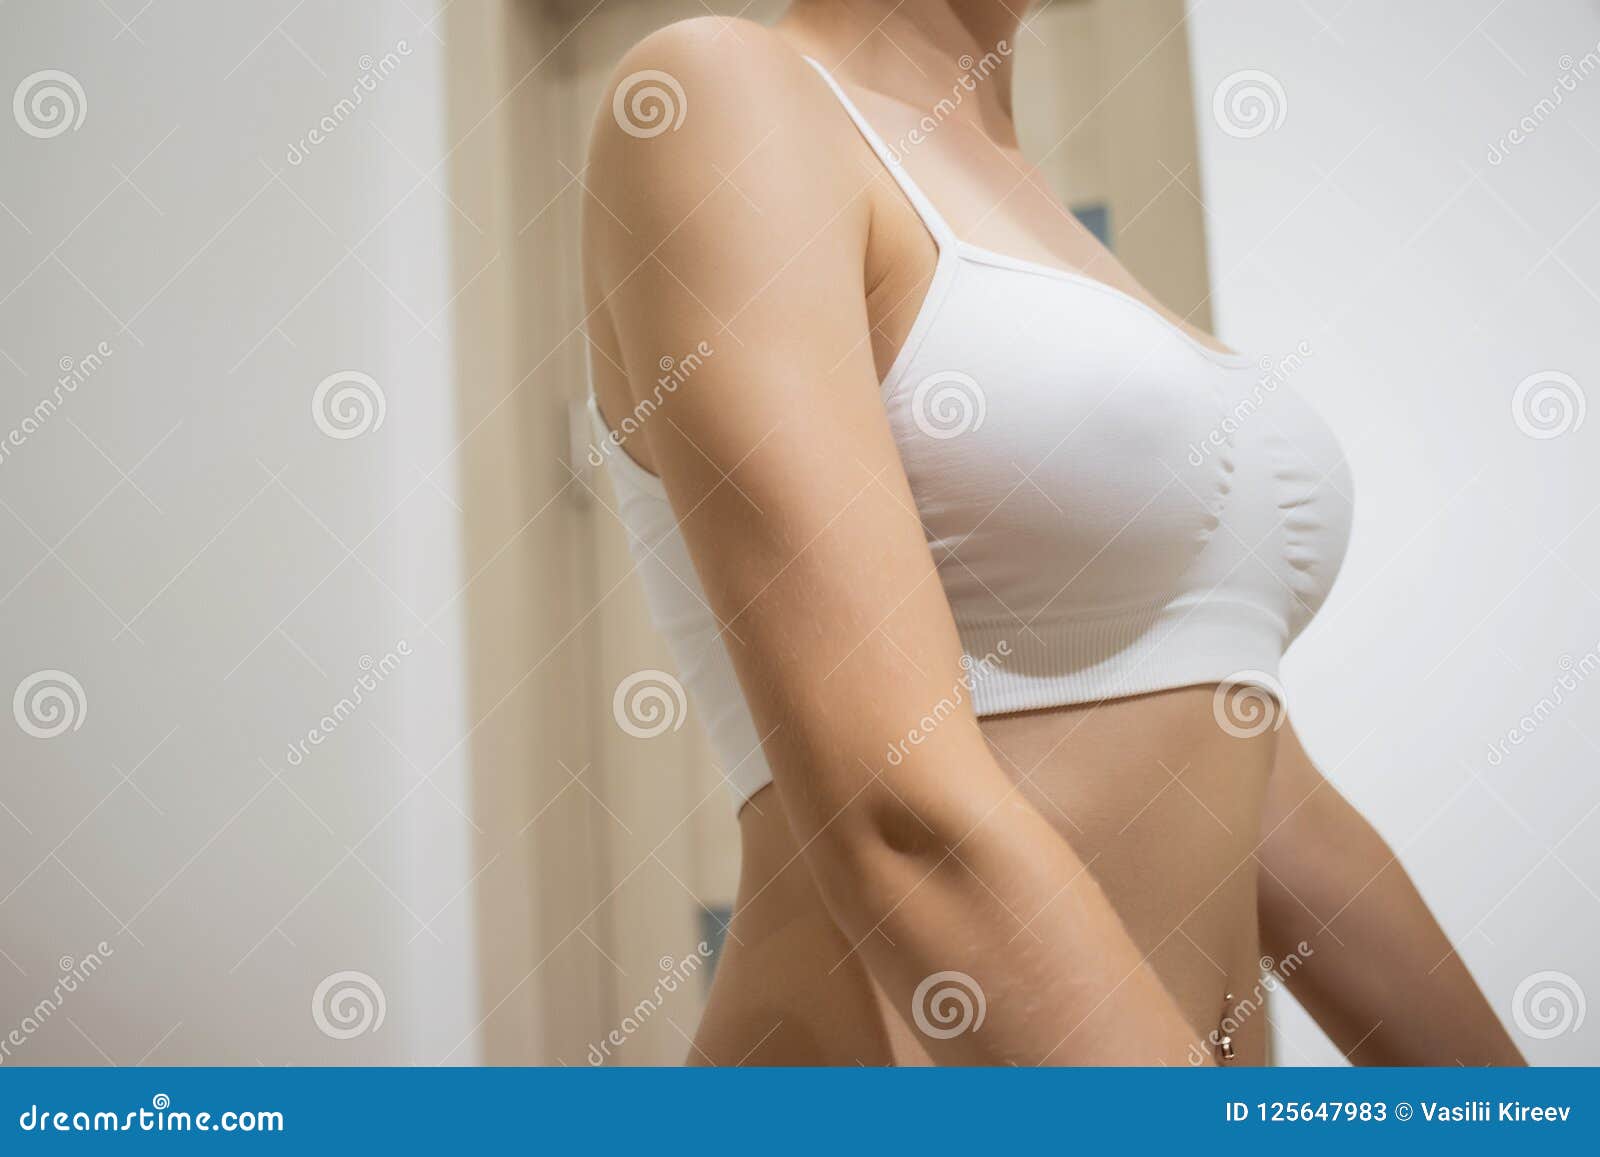 Crop Naked Woman Pulling Up Panties Stock Image - Image of skin, elastic:  125647983